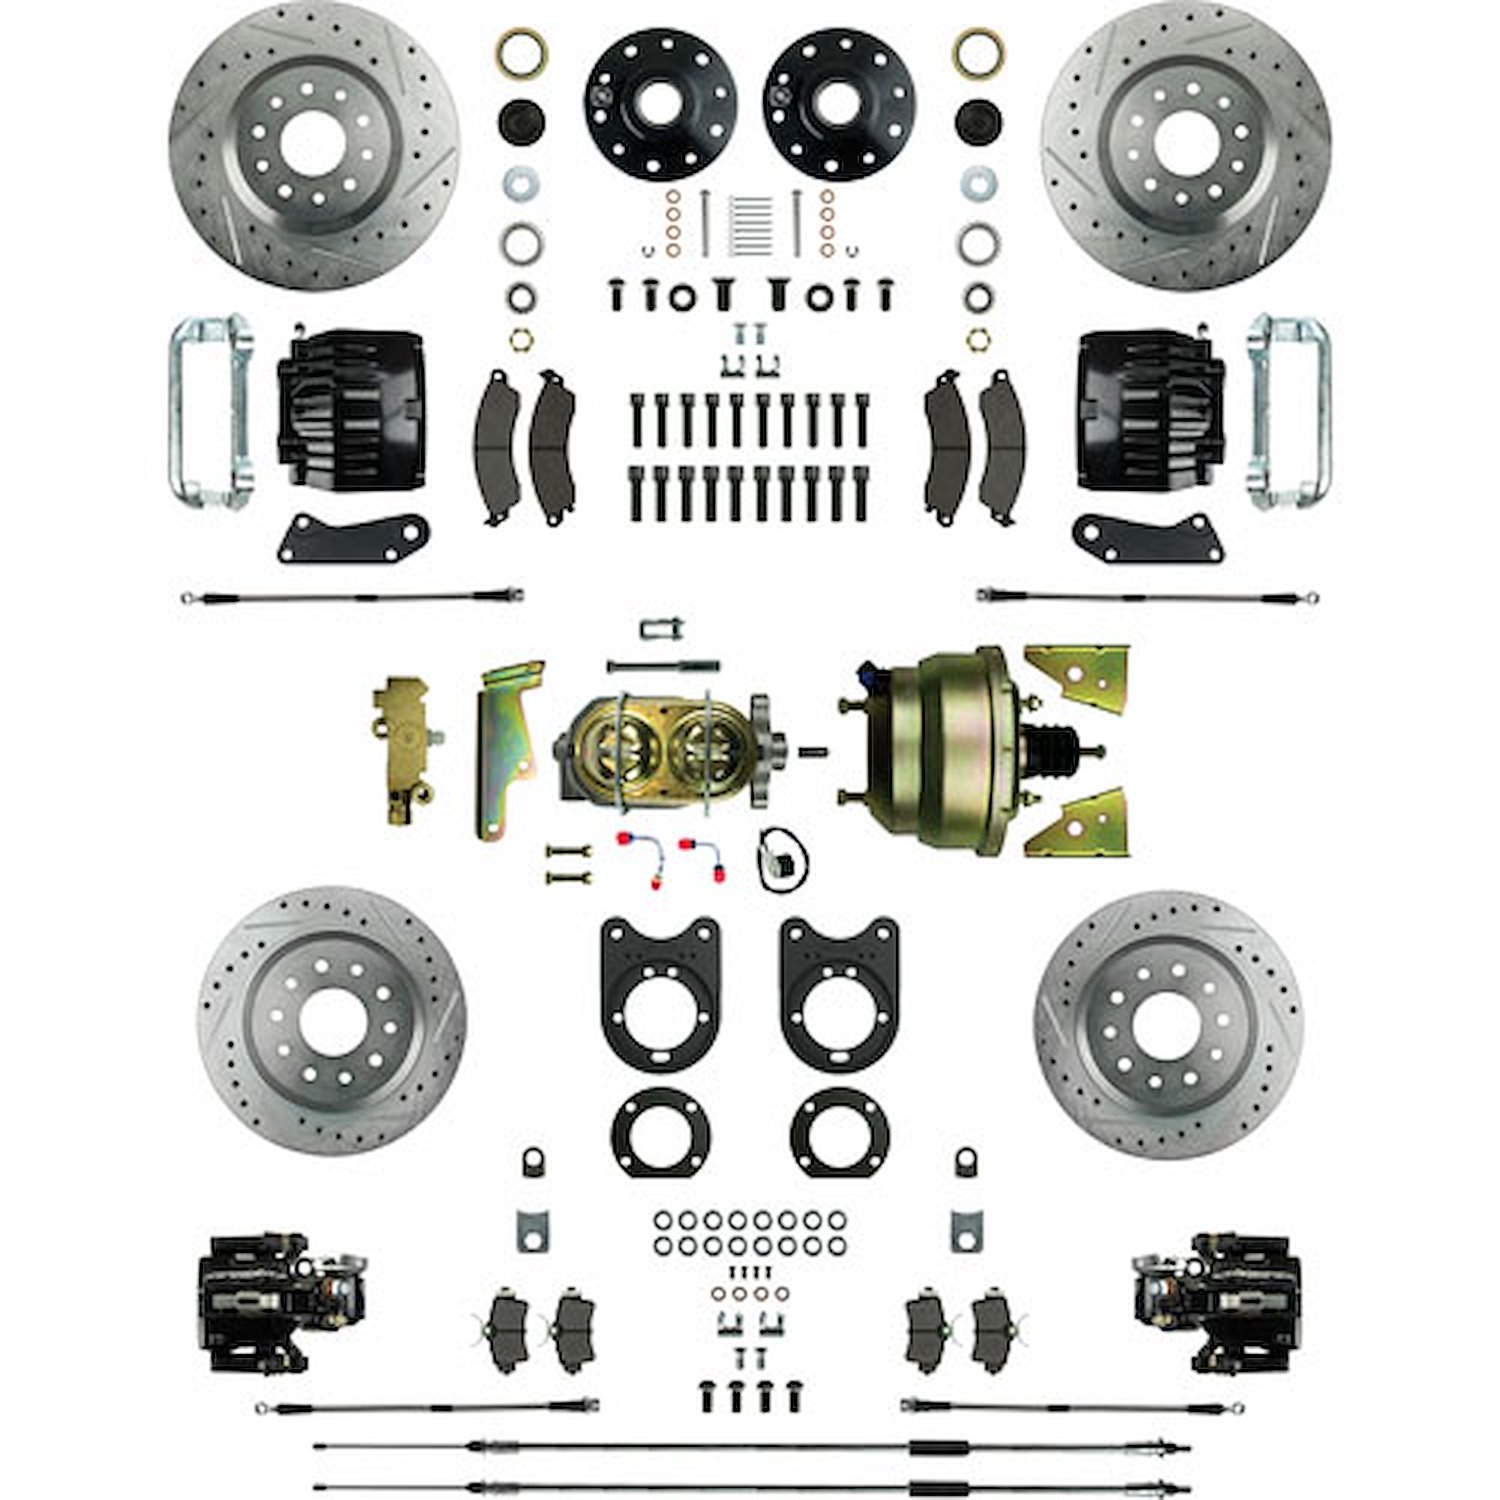 Signature Big Brake "62-"67 "X" Body, Black Calipers, Standard Height Spindles, 4 Wheel Power Disc Conversion